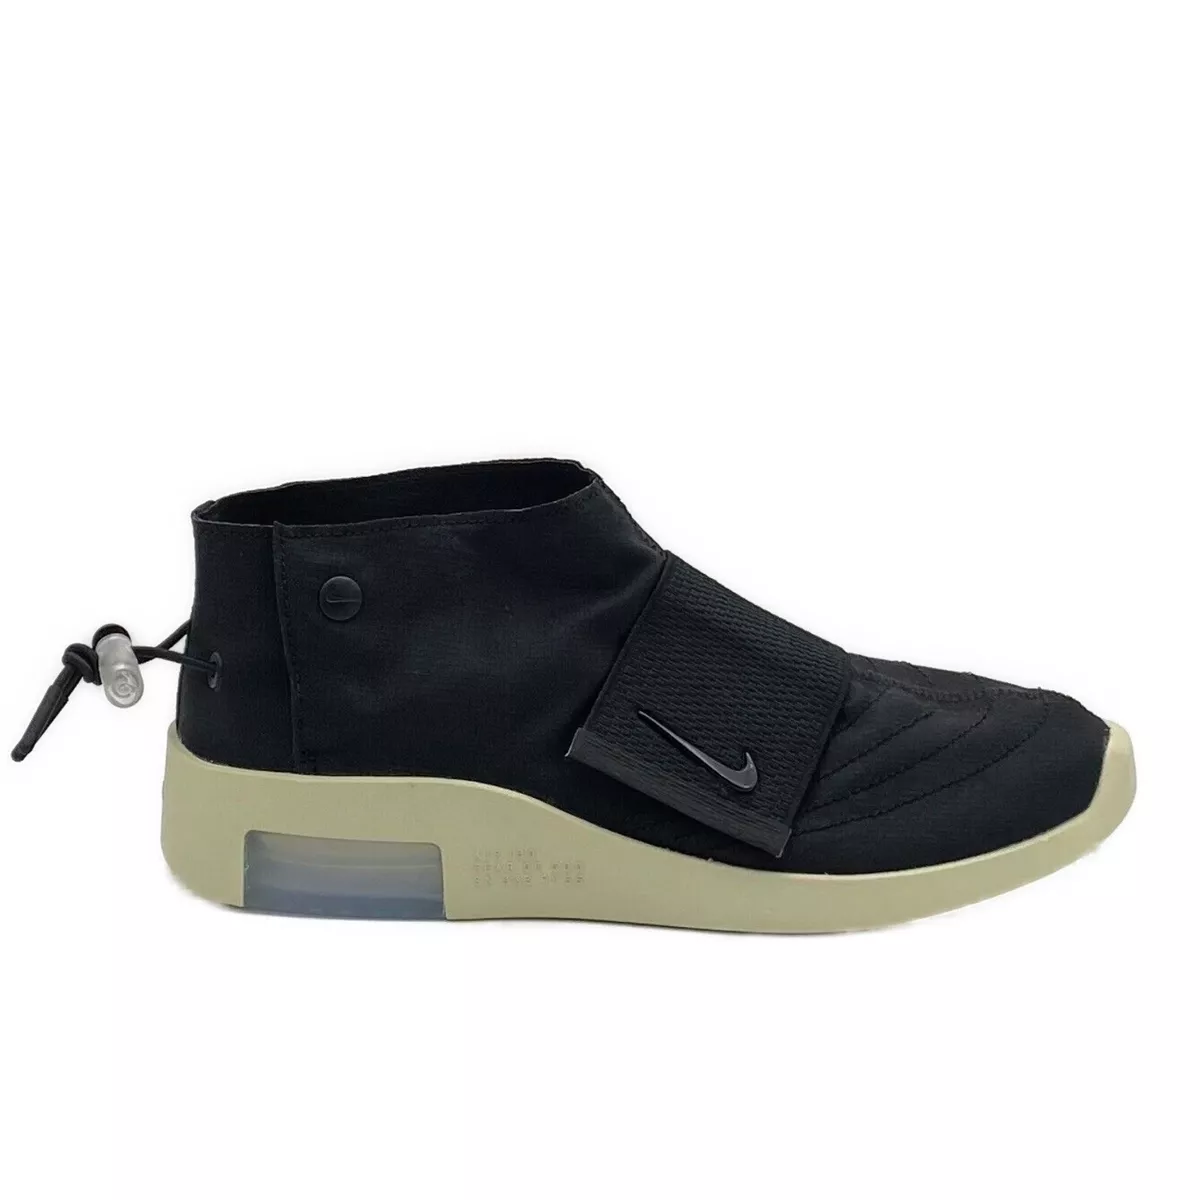 Mesa final blanco lechoso Elegibilidad Nike Air Fear of God Moccasin Moc Black - Men&#039;s Shoes AT8086-002 | eBay